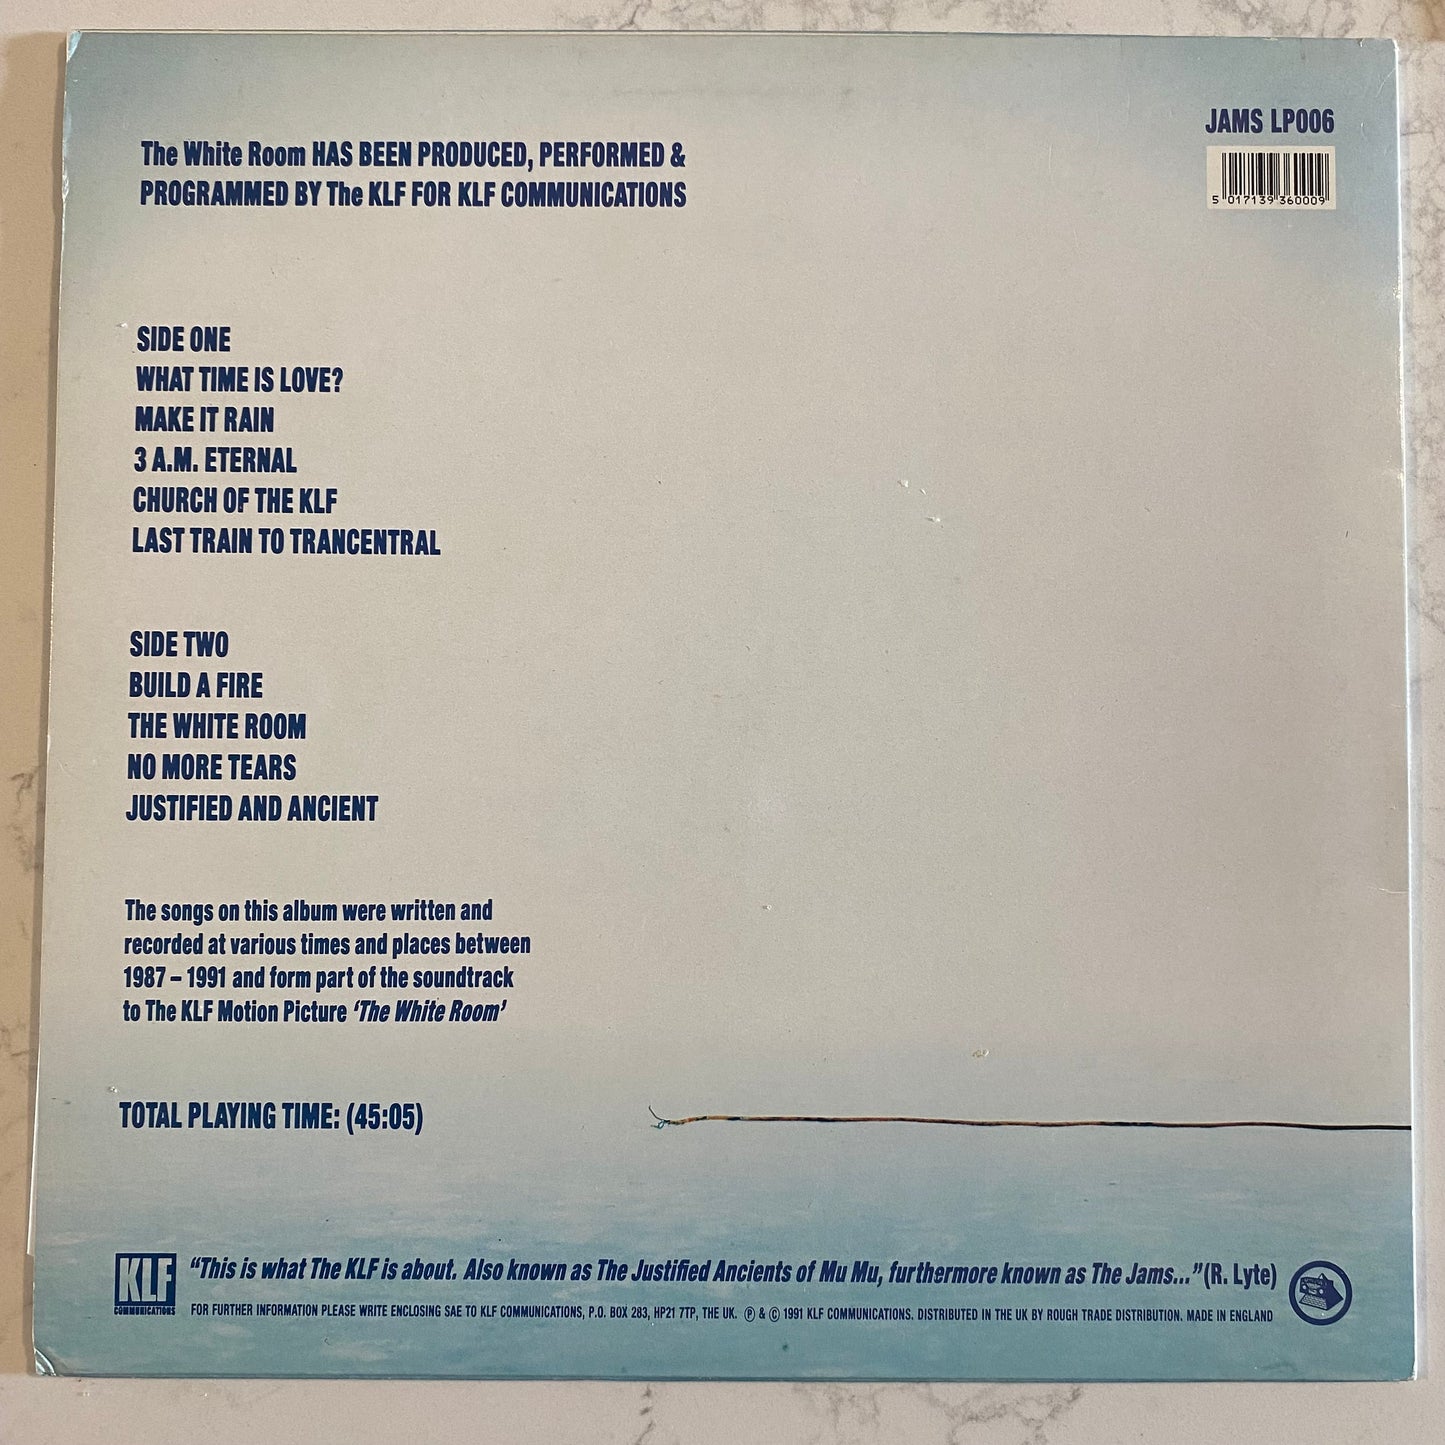 The KLF - The White Room (LP, Album) (L)